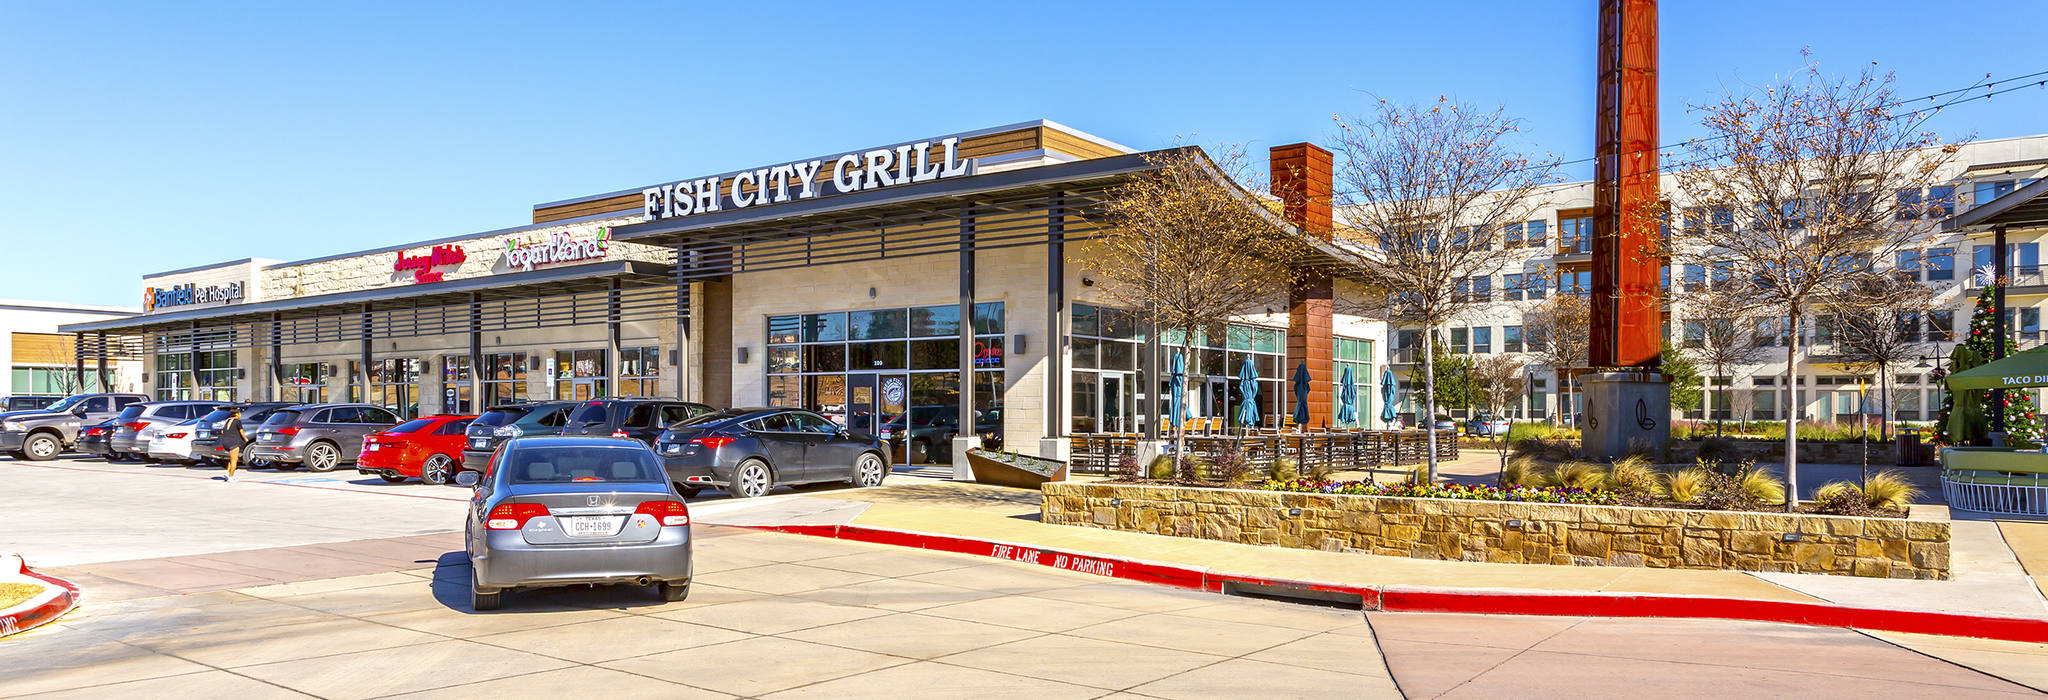 Dallas TX: Lake Highlands Town Center - Retail Space - First Washington